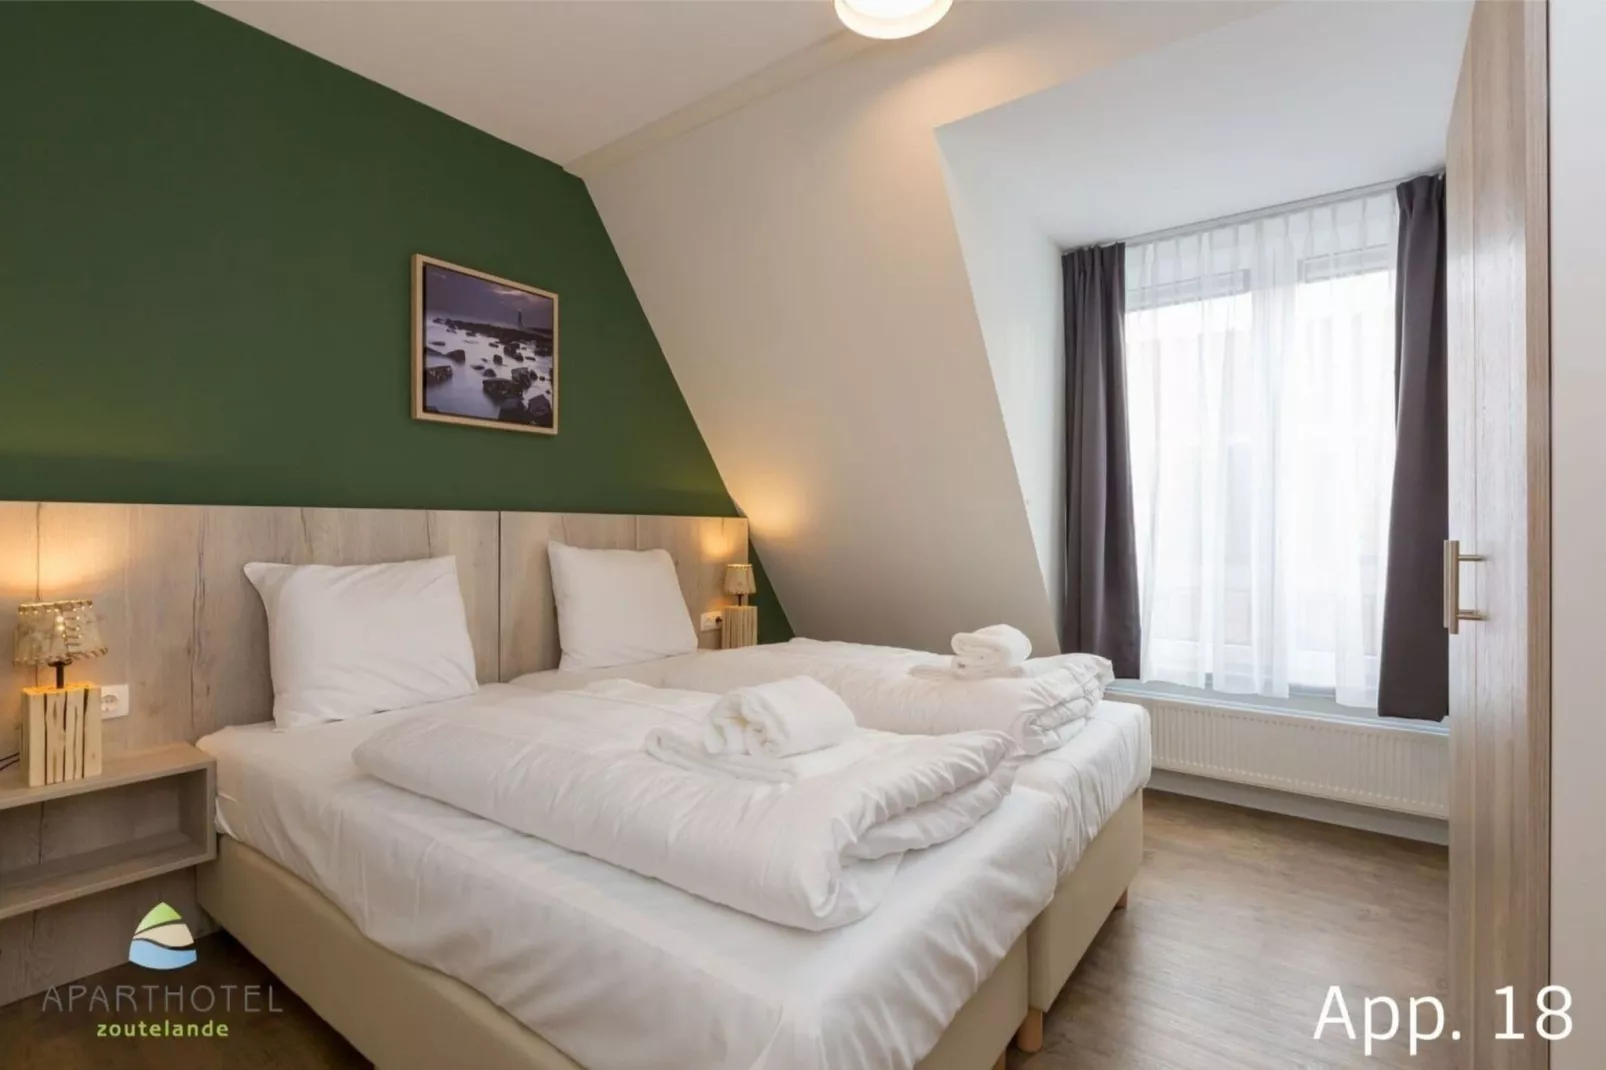 Aparthotel Zoutelande - 6 pers luxe appartement huisdier-Slaapkamer